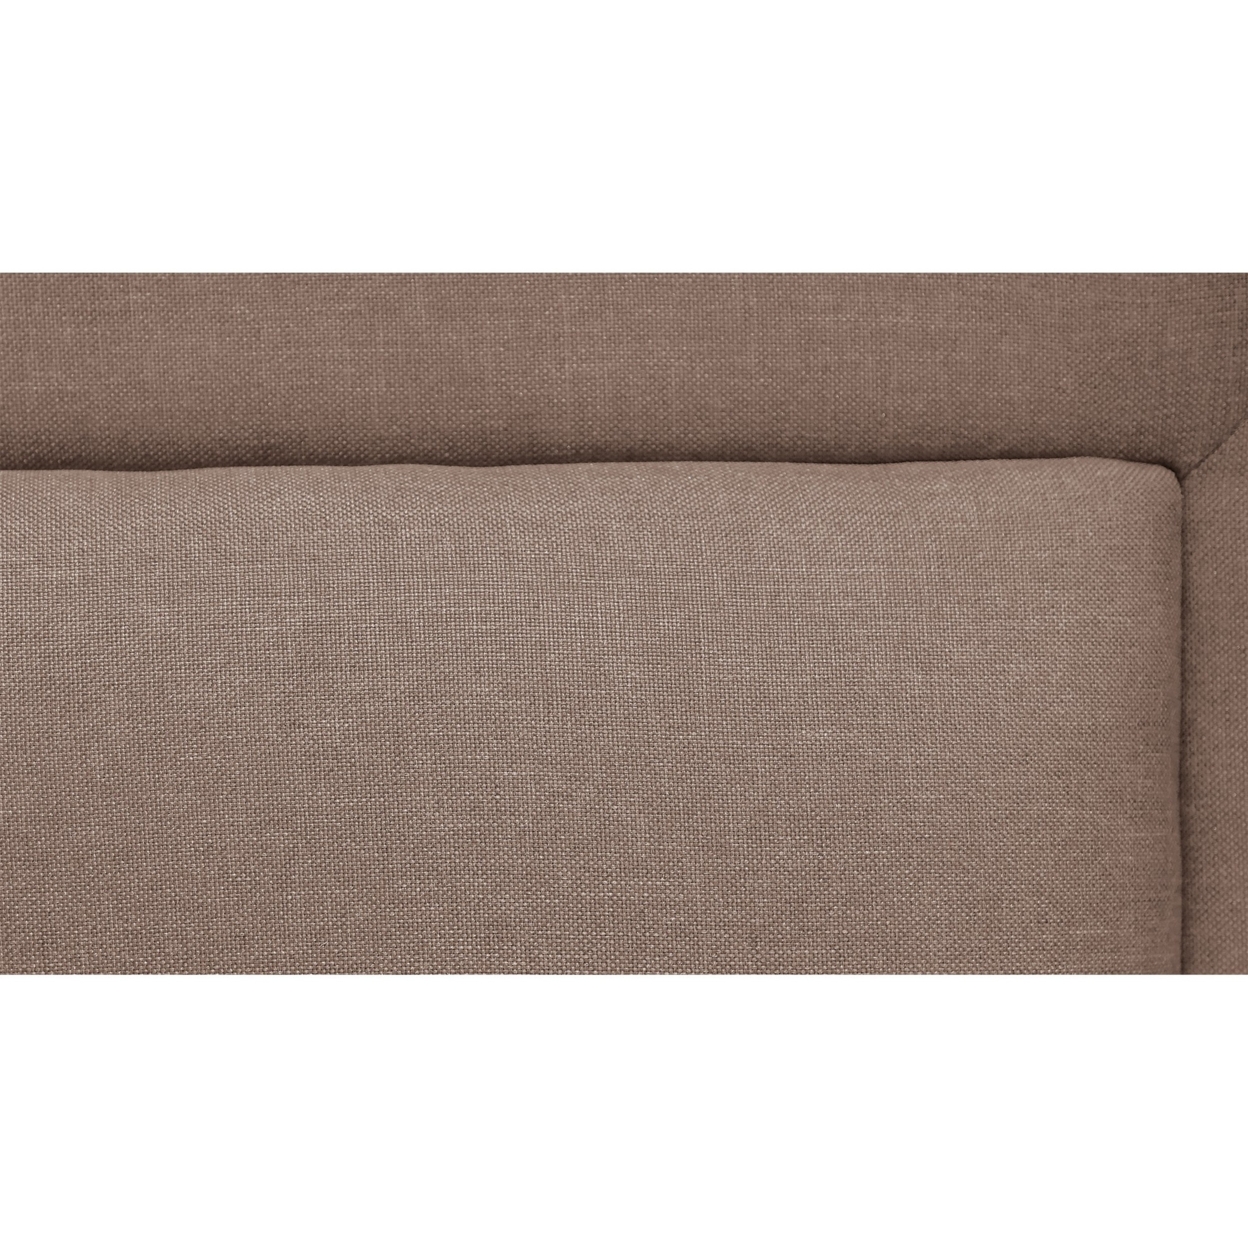 Liam Queen Bed, Brown Polylinen Upholstered Horizontal Tufted Headboard- Saltoro Sherpi